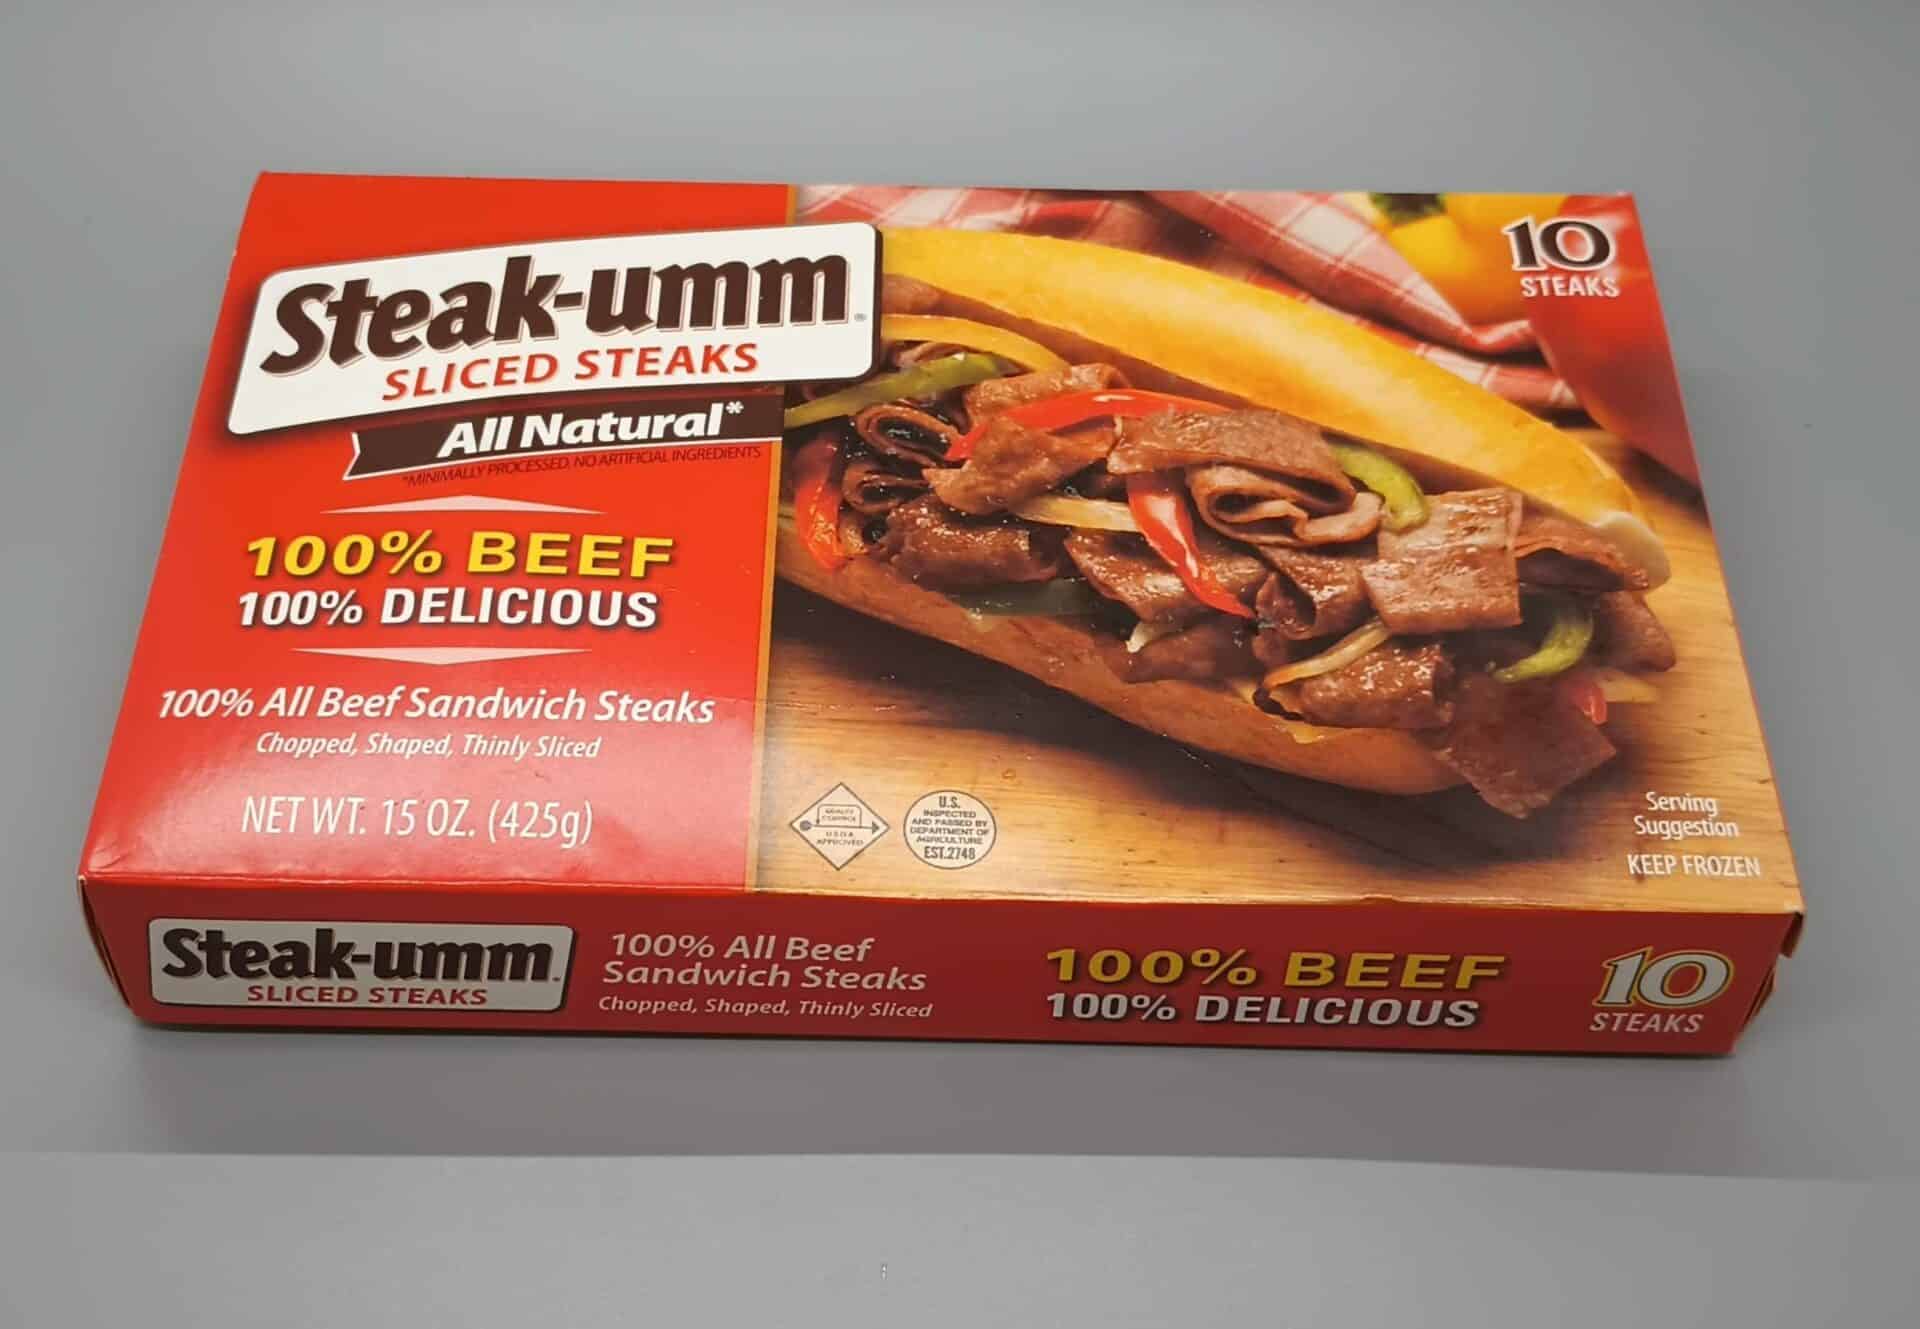 Steak-umm Sliced Steaks